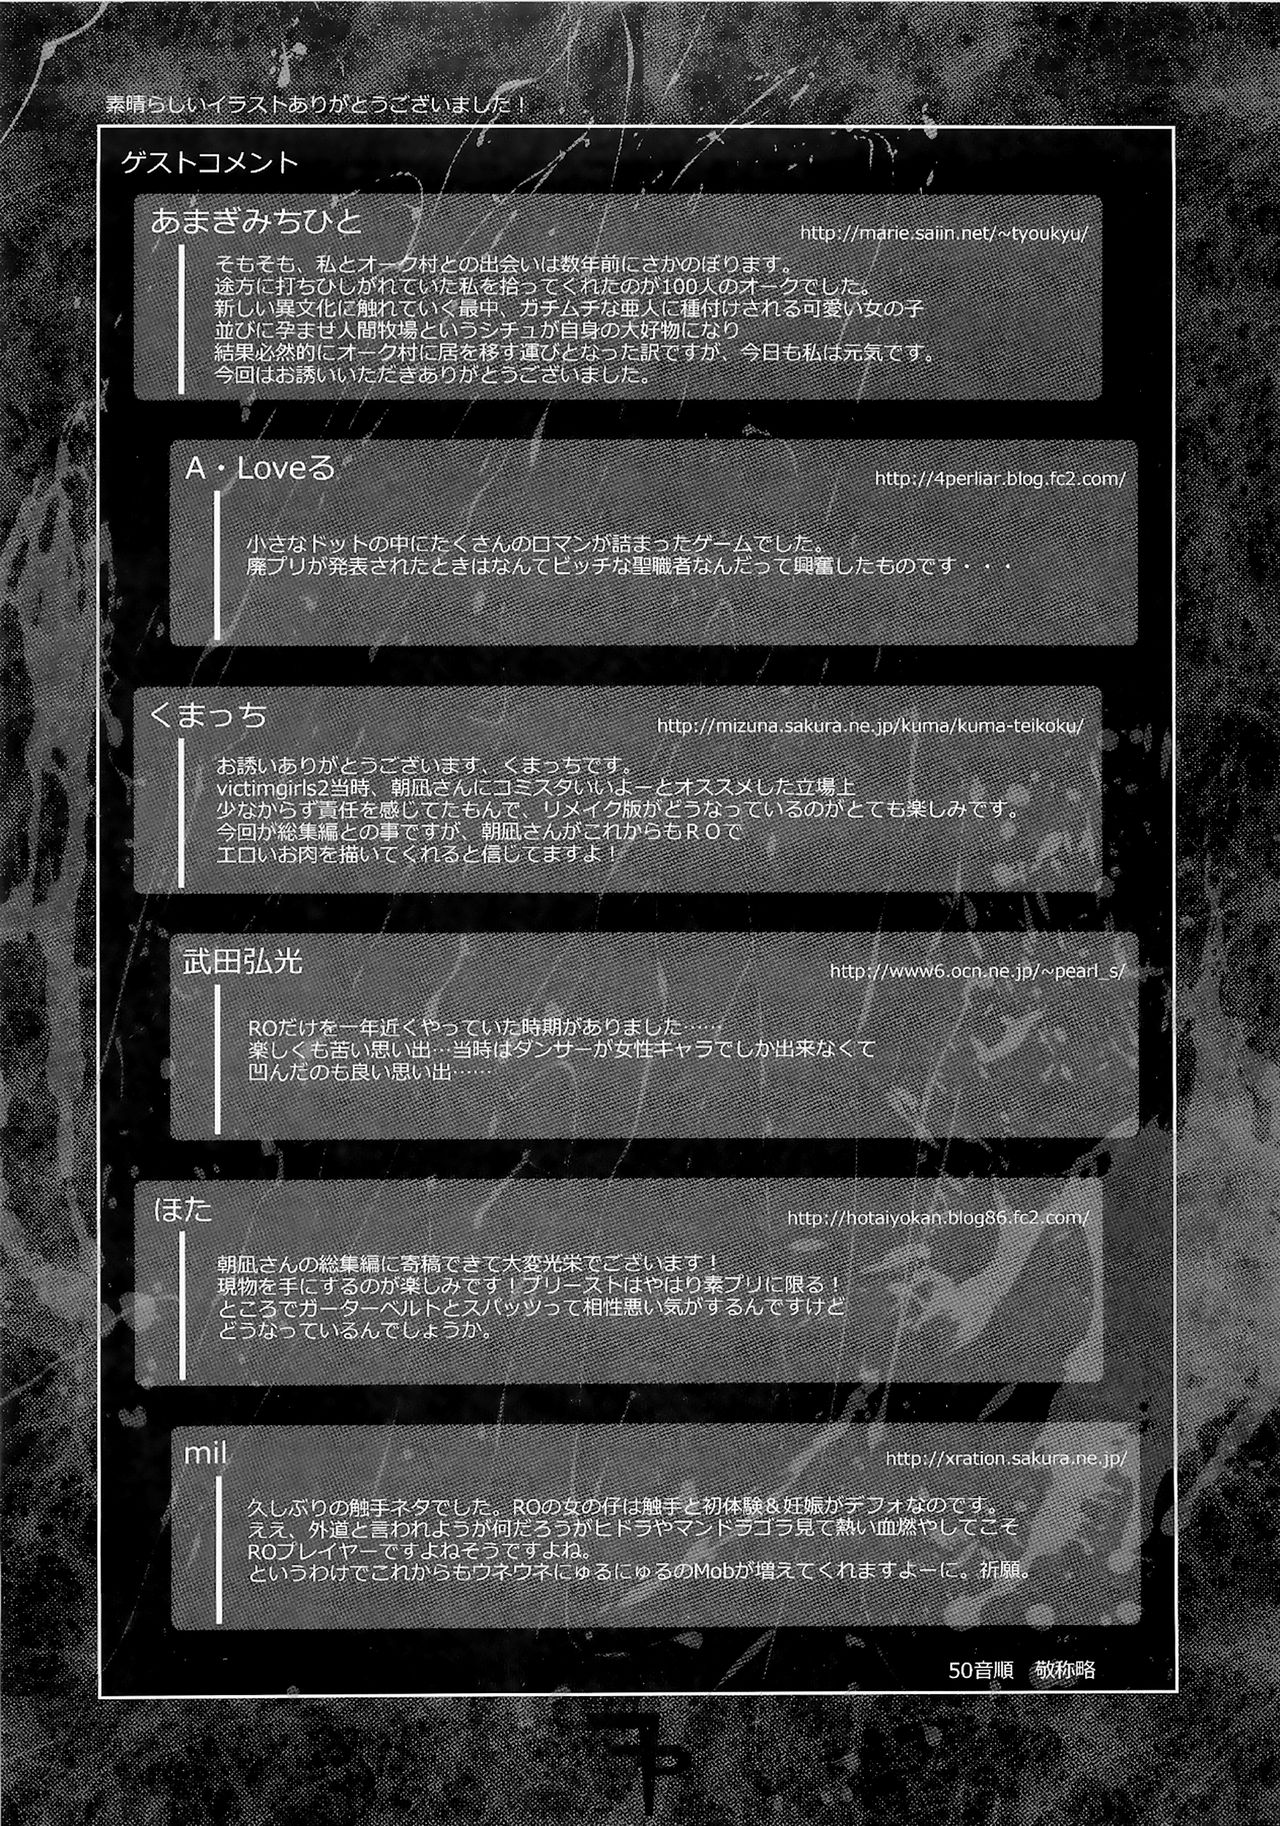 (C83) [Fatalpulse (朝凪)] VictimGirls Compiled Vol.1 -Victimgirls総集編1- MMO Game Selection (よろず)[中国翻訳]